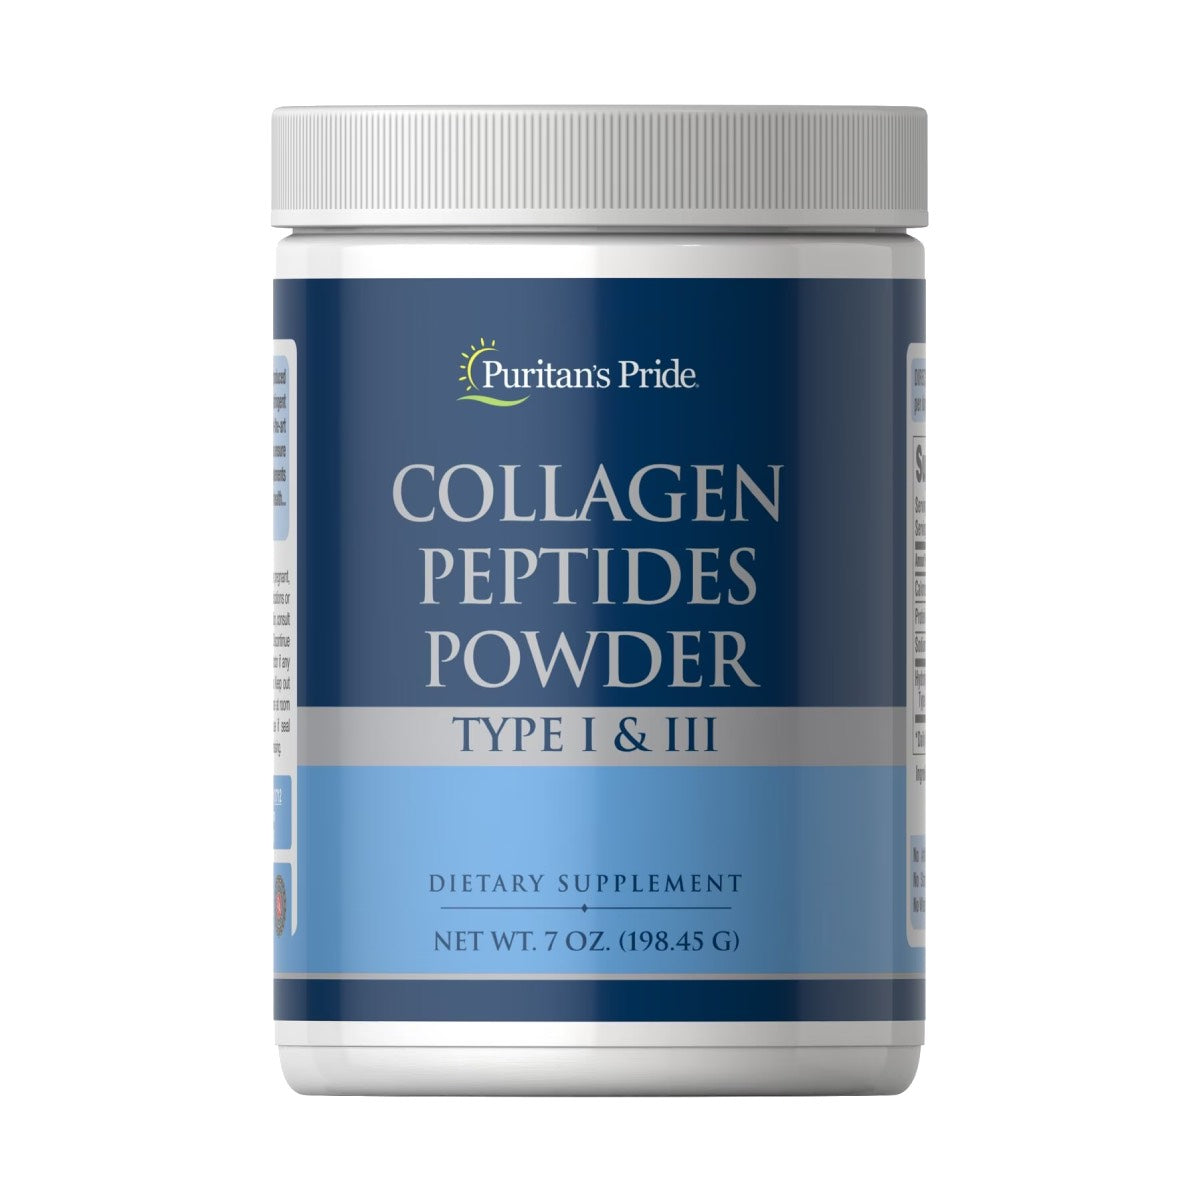 Puritan's Pride, Collagen Peptides Powder Type I & III